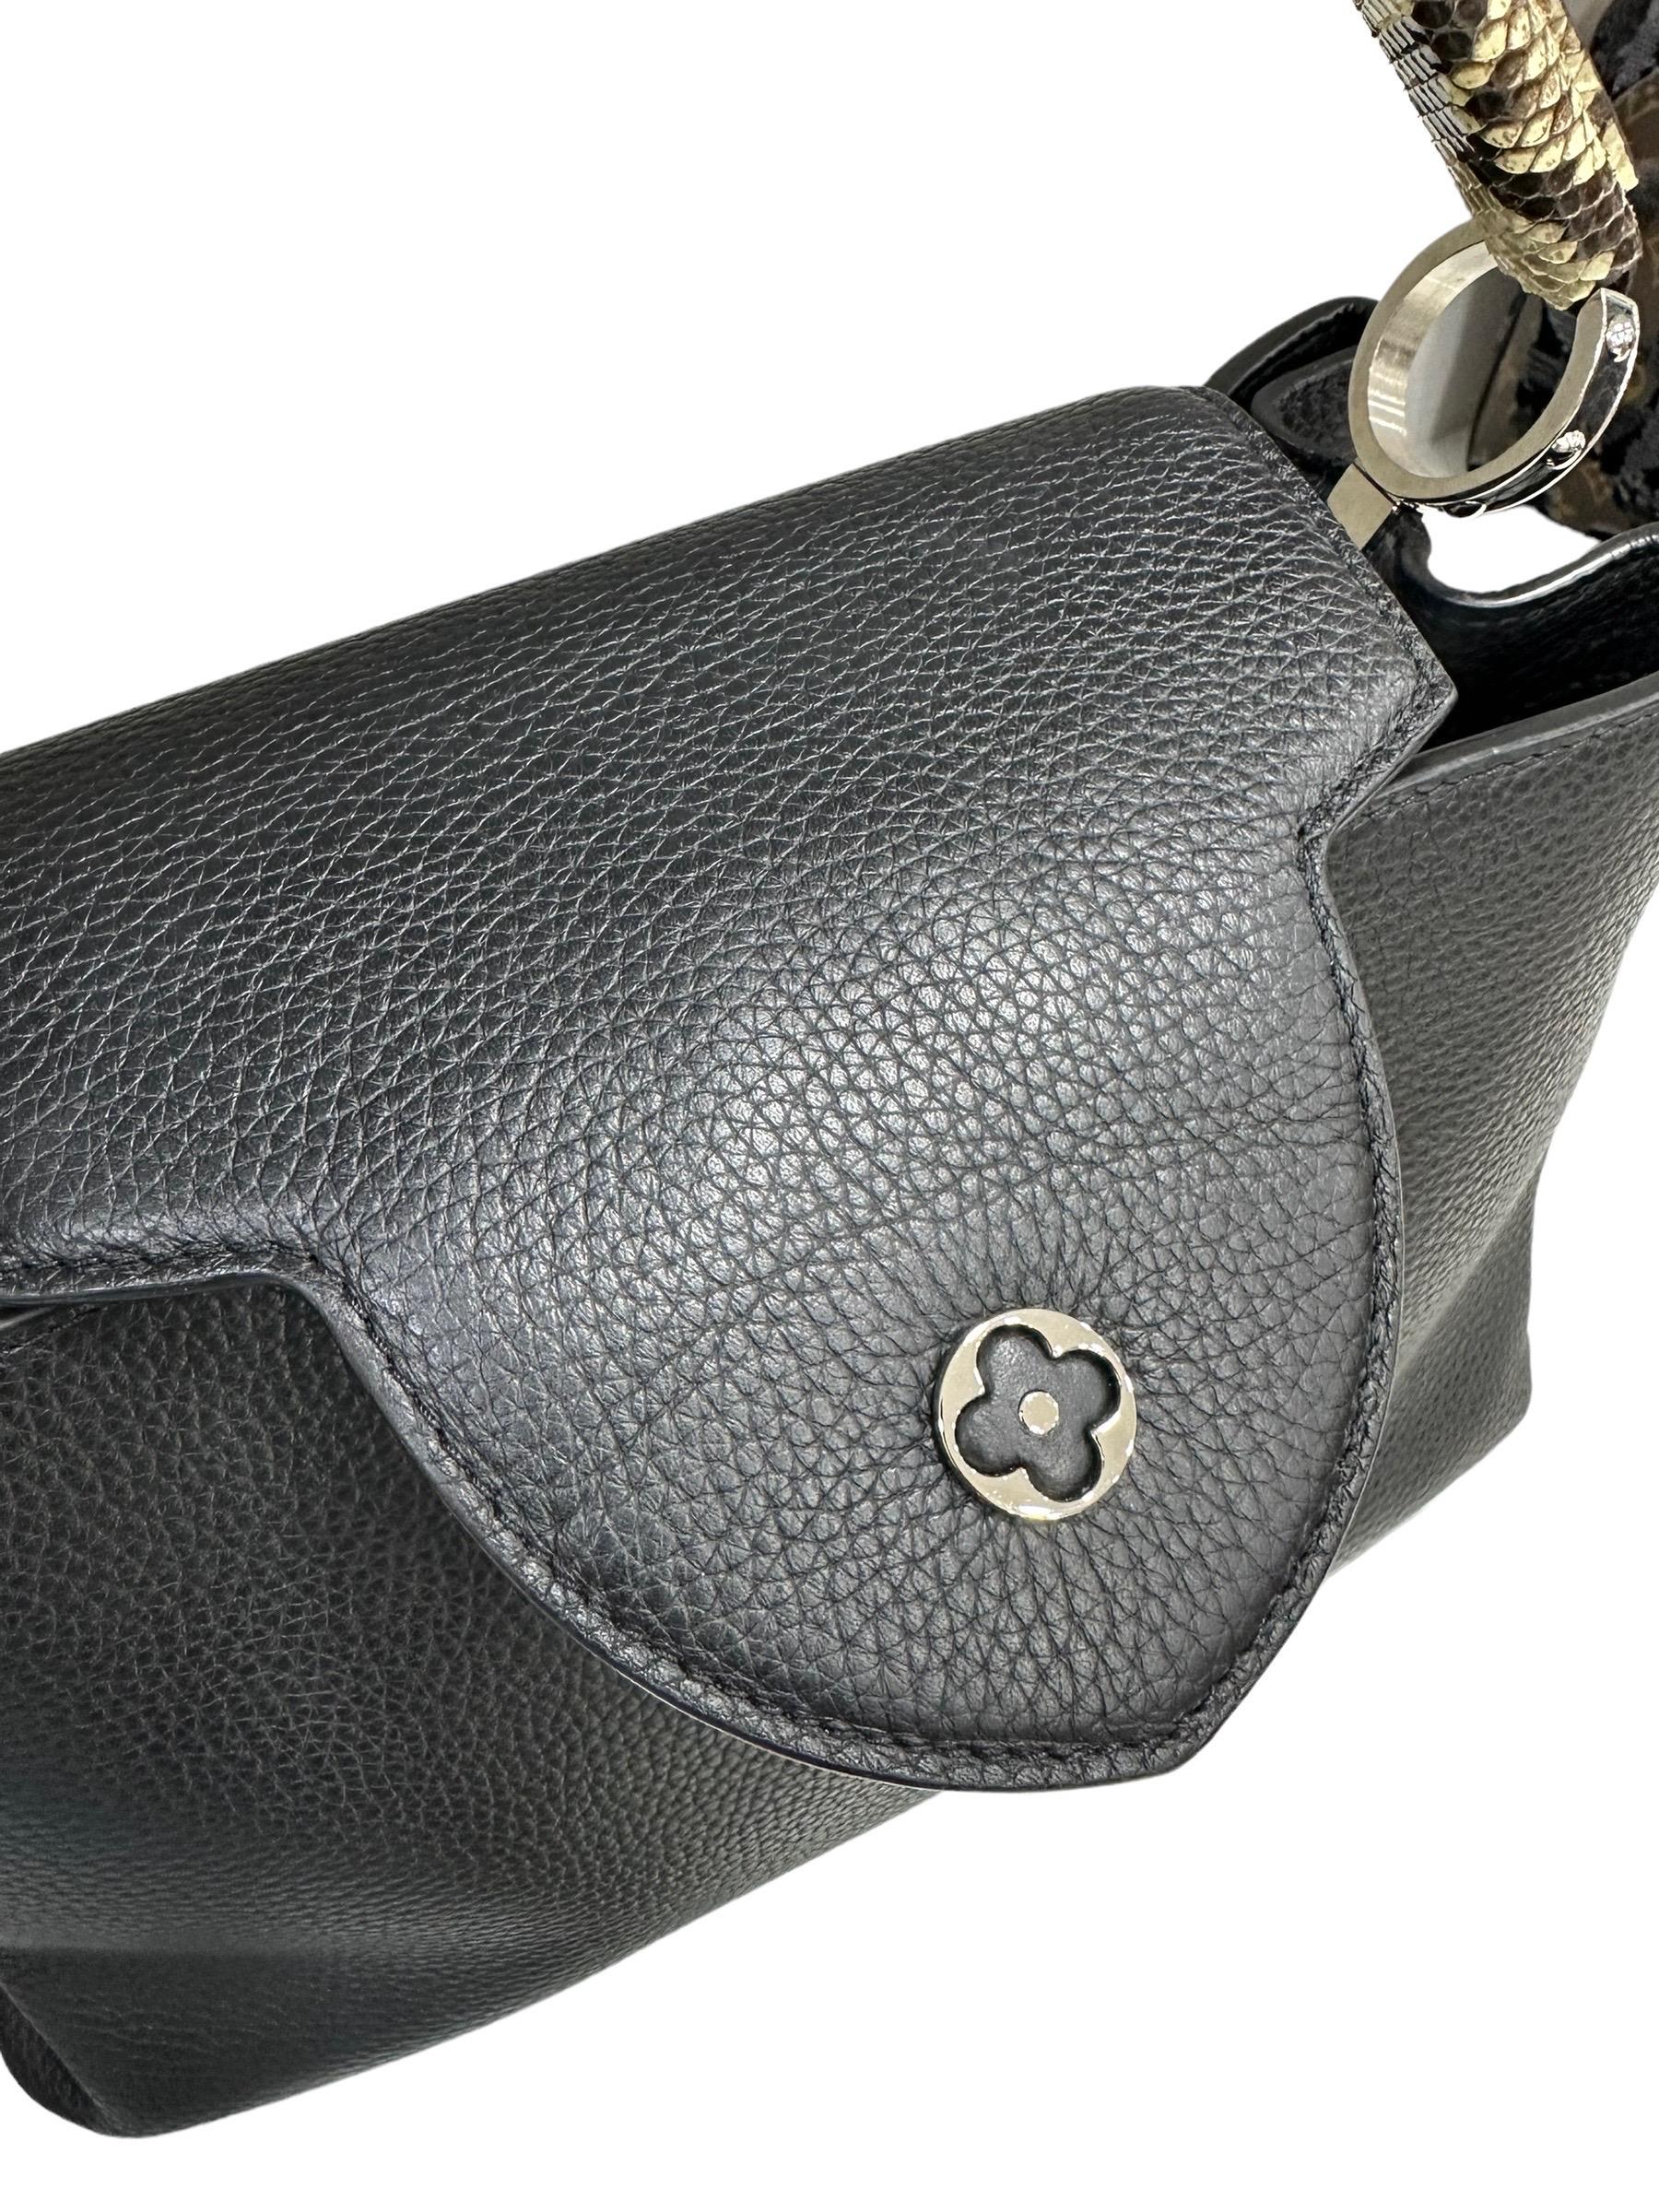 Louis Vuitton Capucines GM Top Handle Bag Black Leather For Sale 3